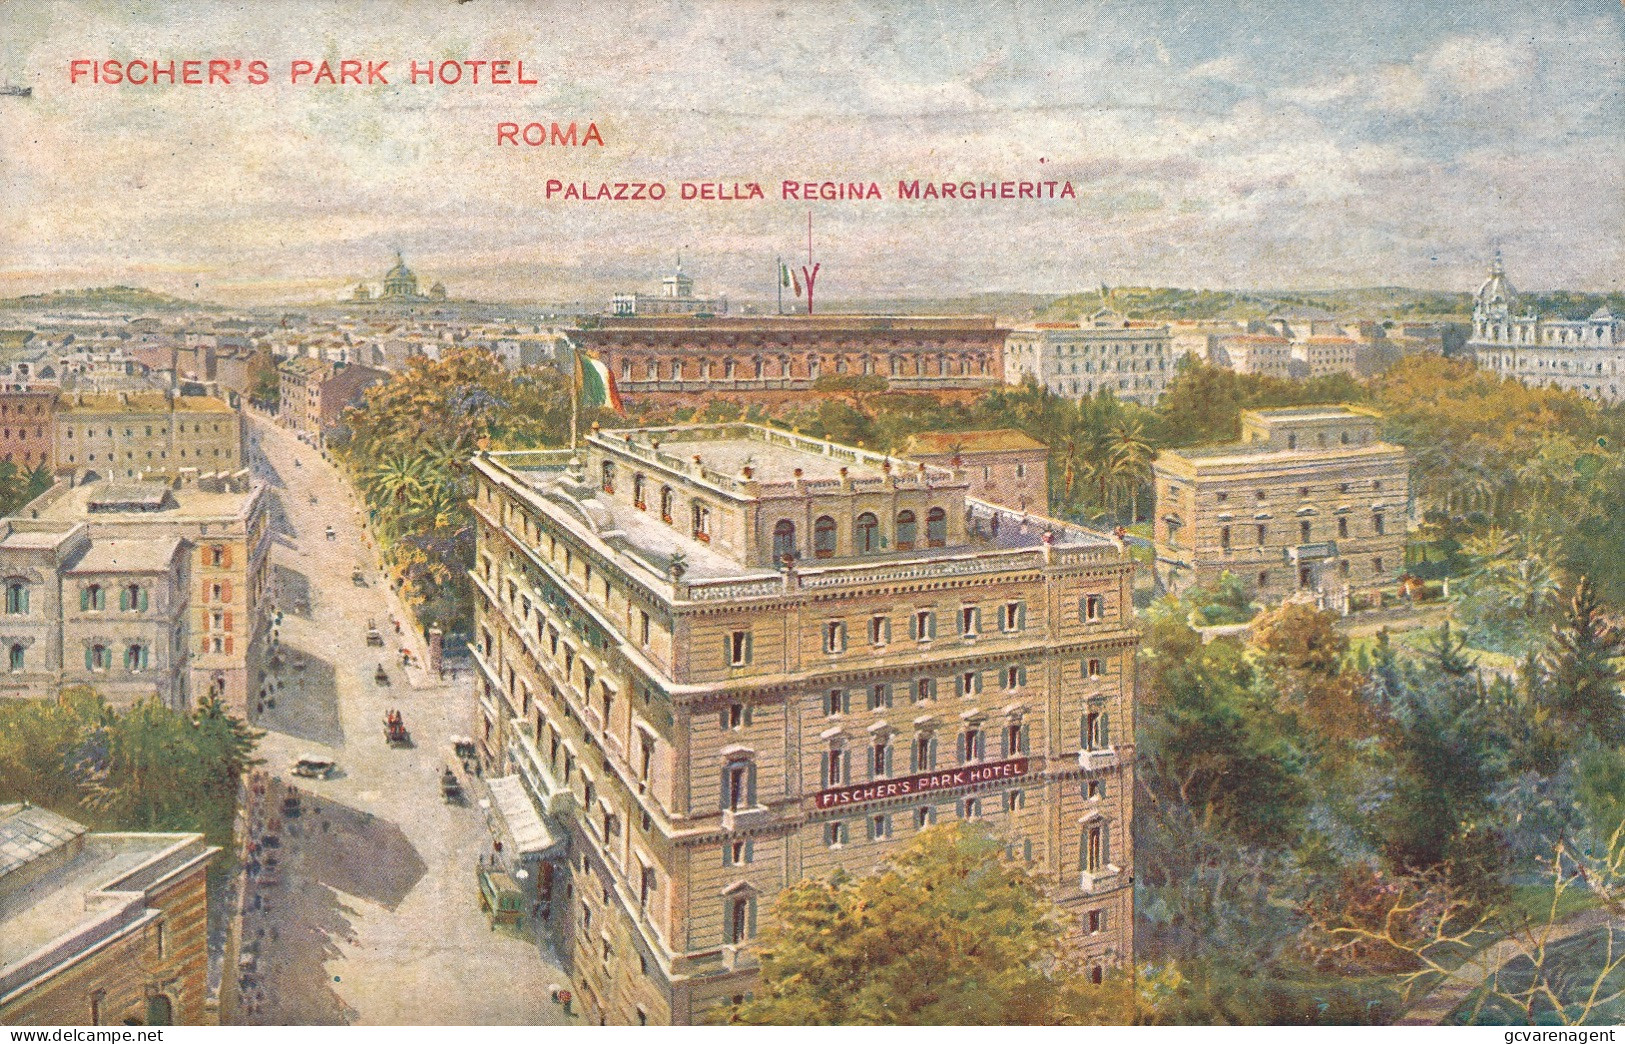 ROMA  FISCHER'S PARK HOTEL                 2 SCANS - Bares, Hoteles Y Restaurantes